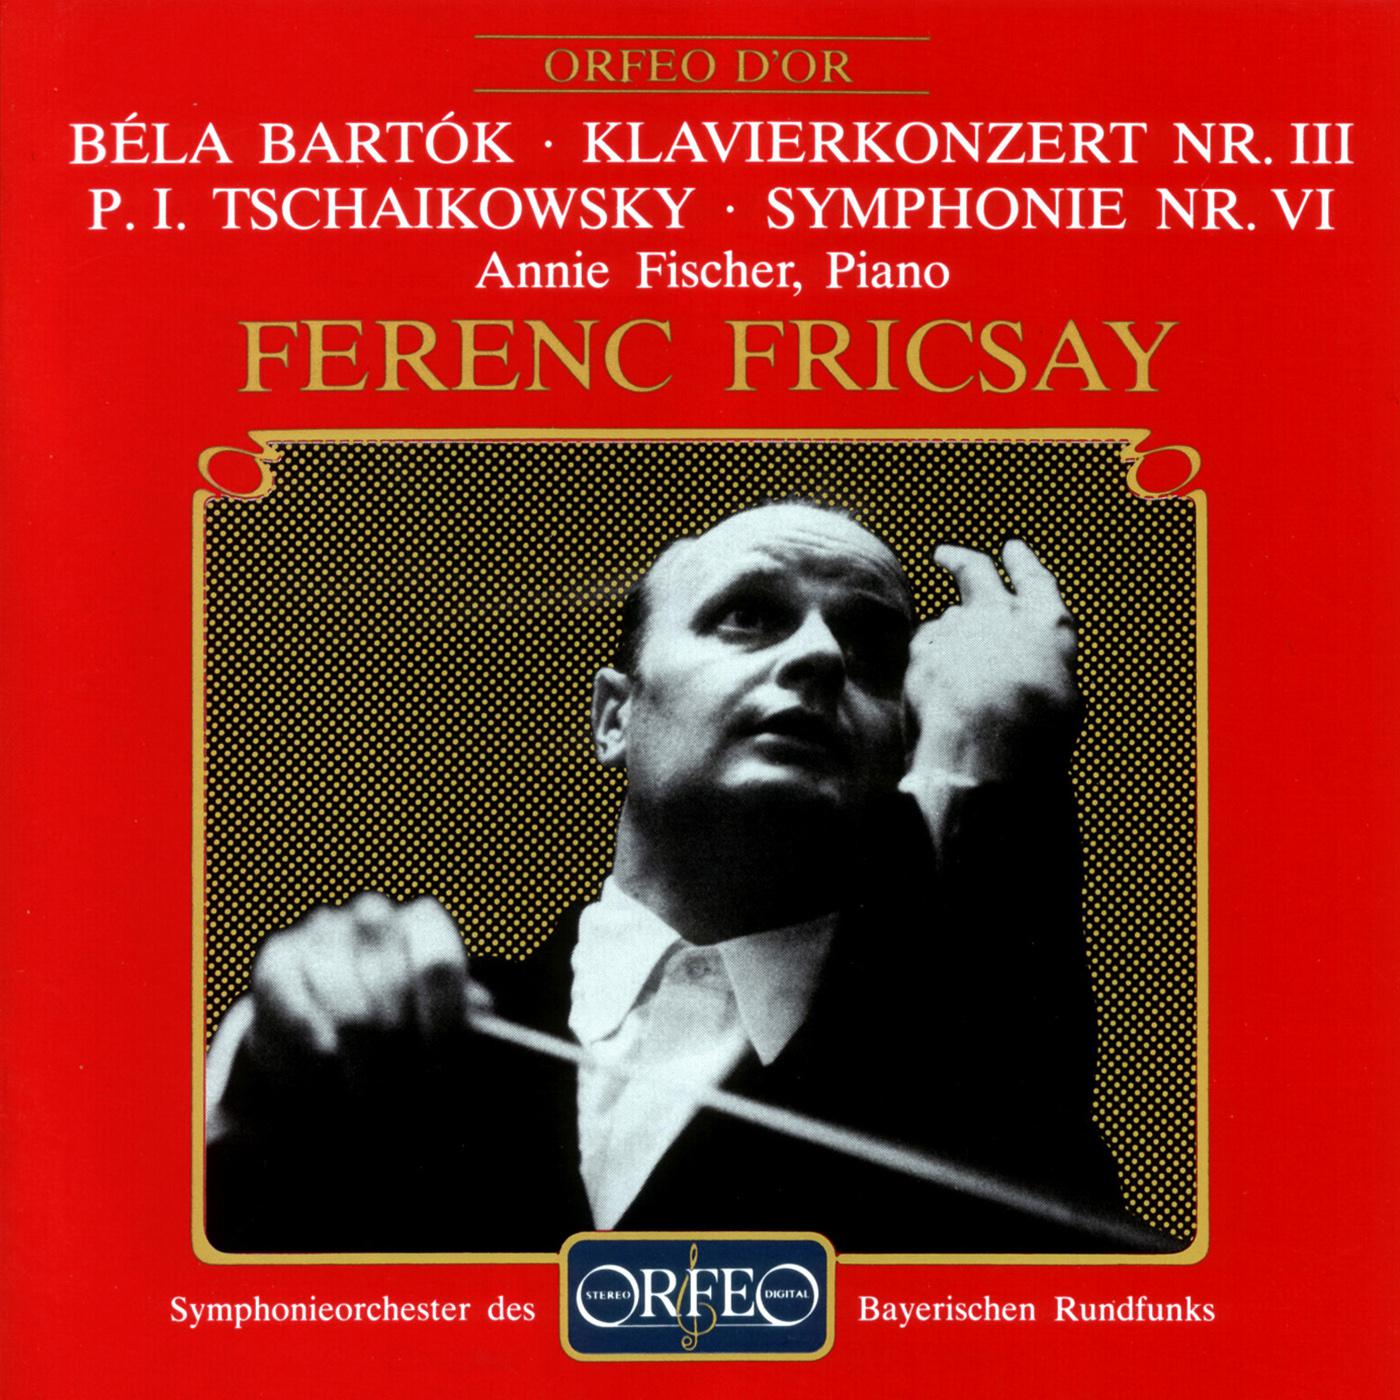 BARTÓ K, B.: Piano Concertos No. 3  TCHAIKOVSKY, P. I.: Symphony No. 6, " Pathe tique" A. Fischer, Bavarian Radio Symphony, Fricsay